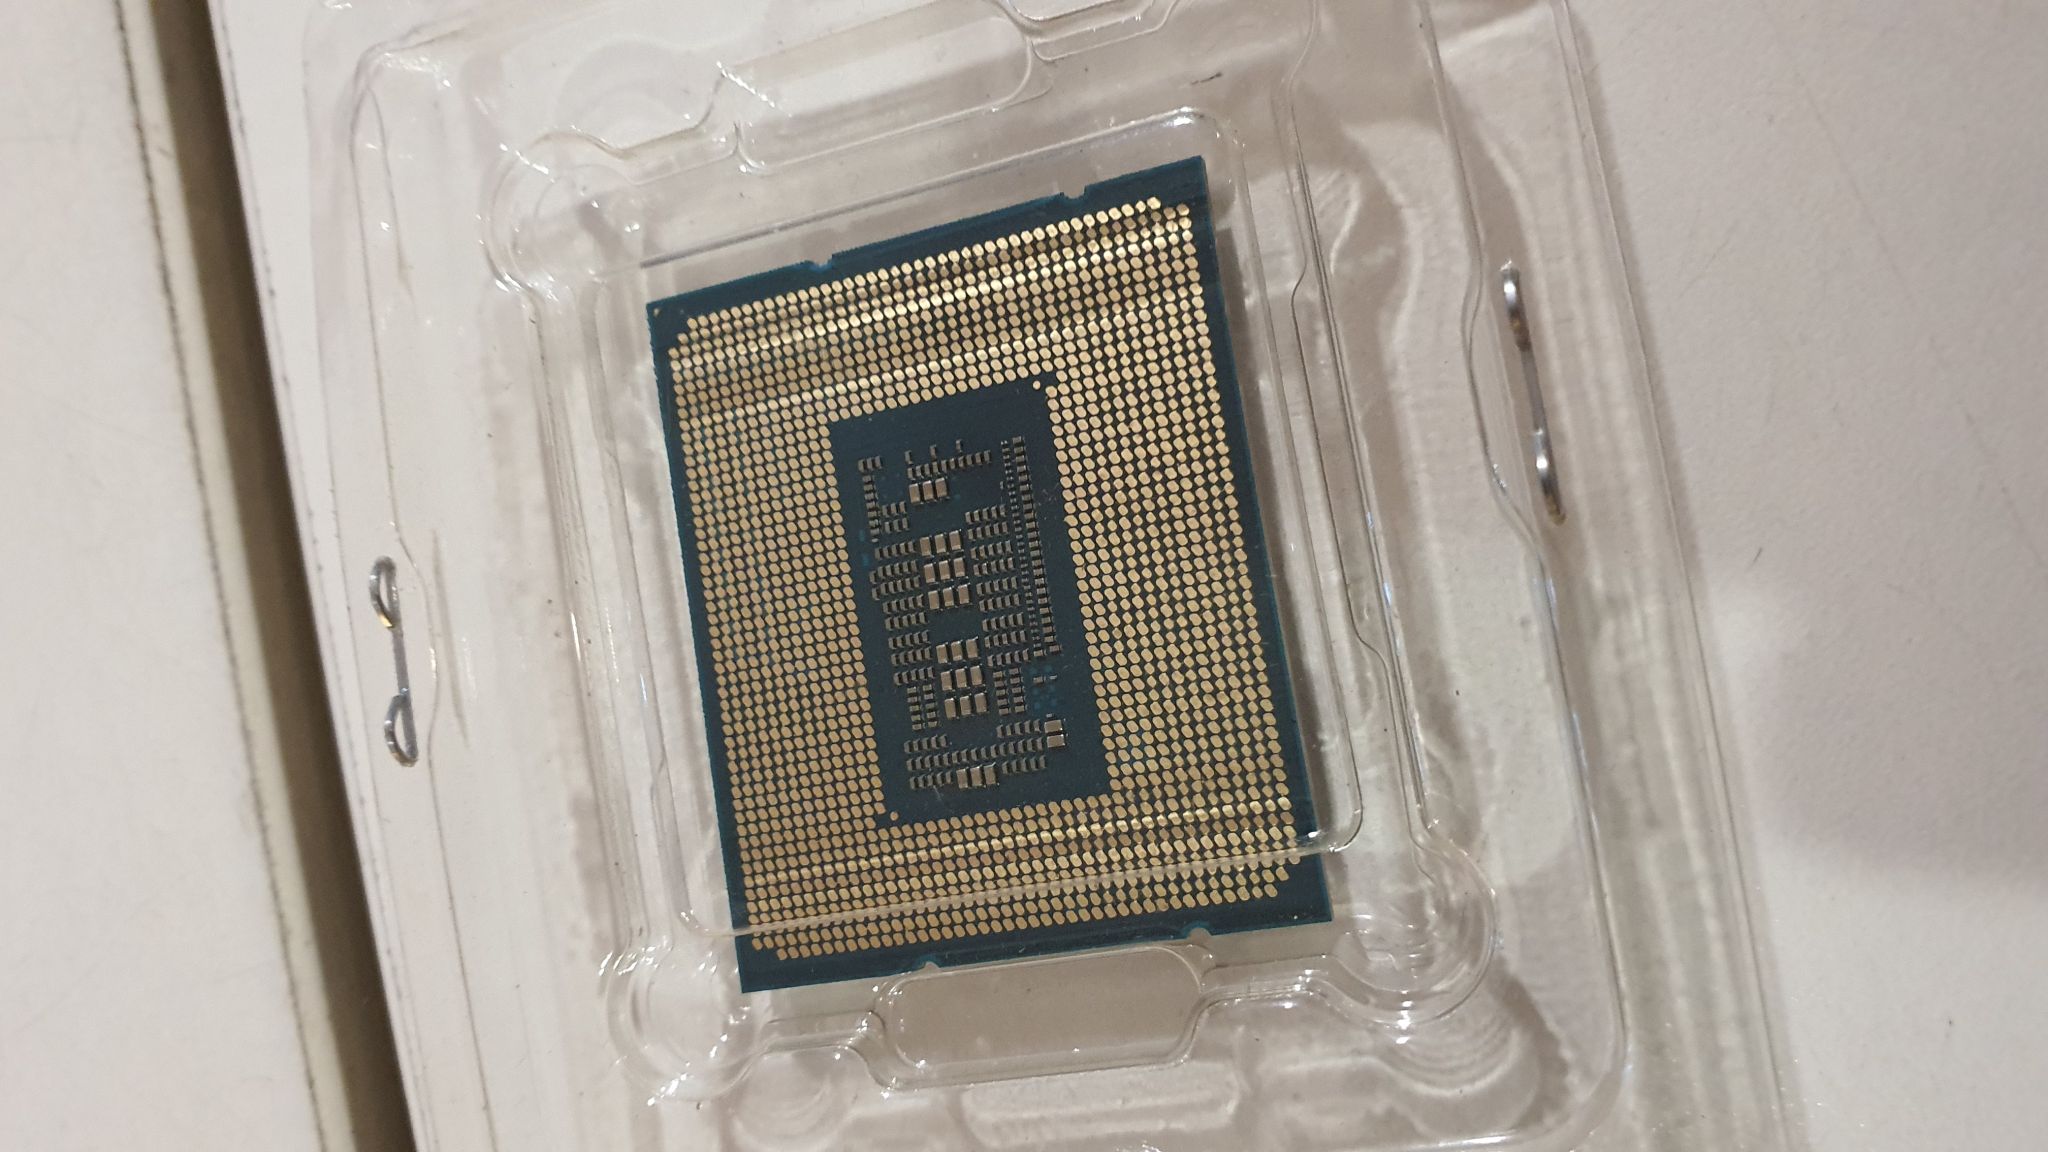 Intel i7 12700 oem